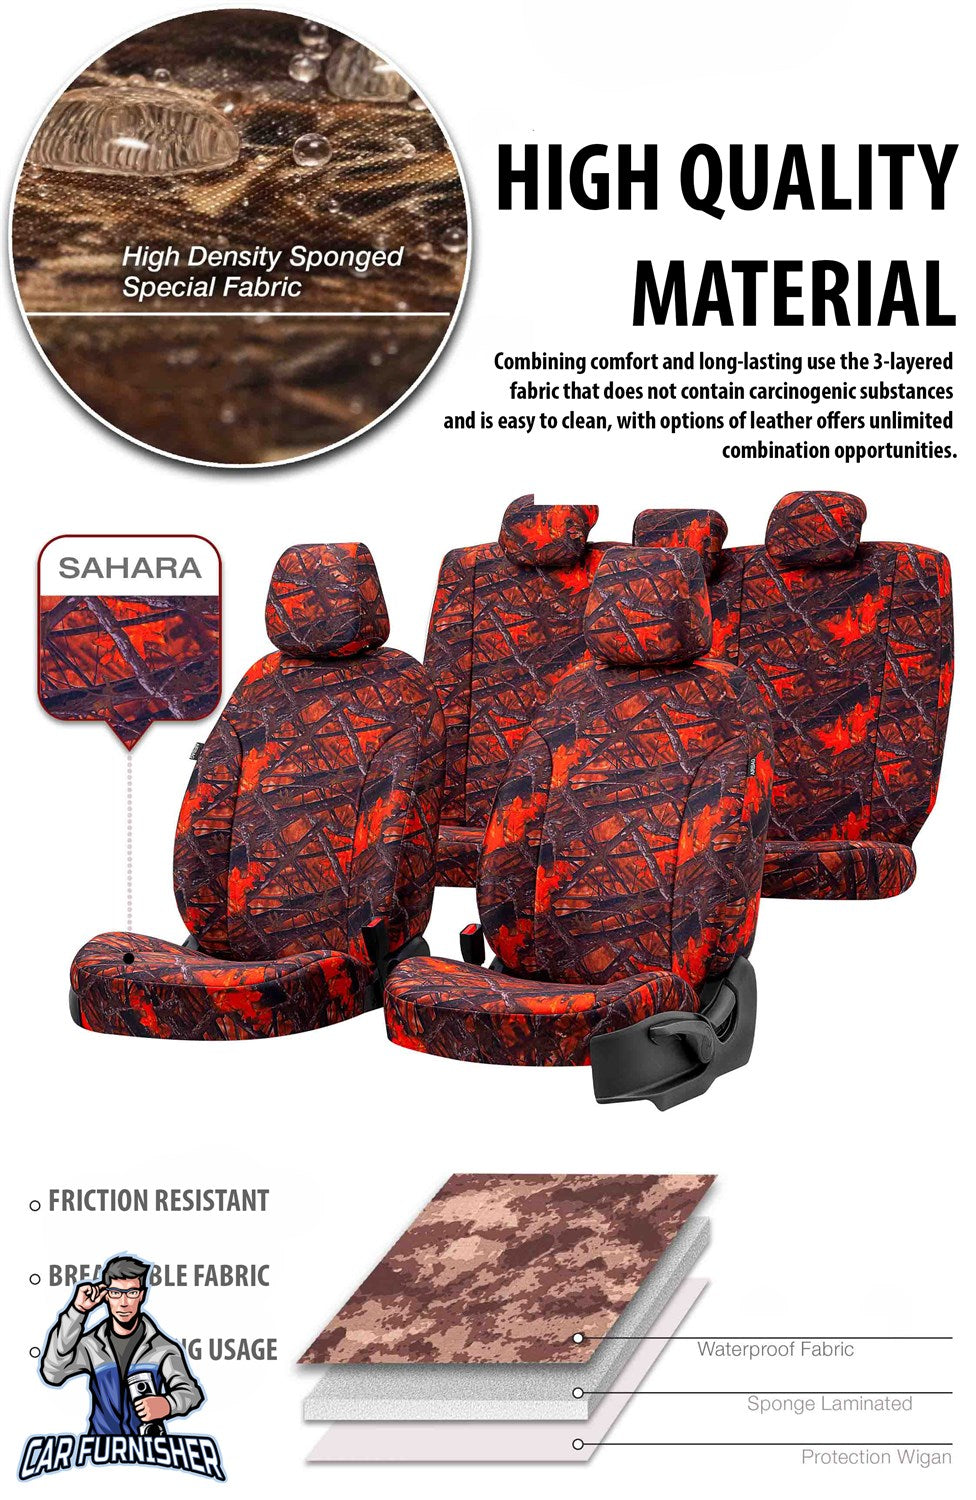 Opel Frontera Seat Cover Camouflage Waterproof Design Alps Camo Waterproof Fabric